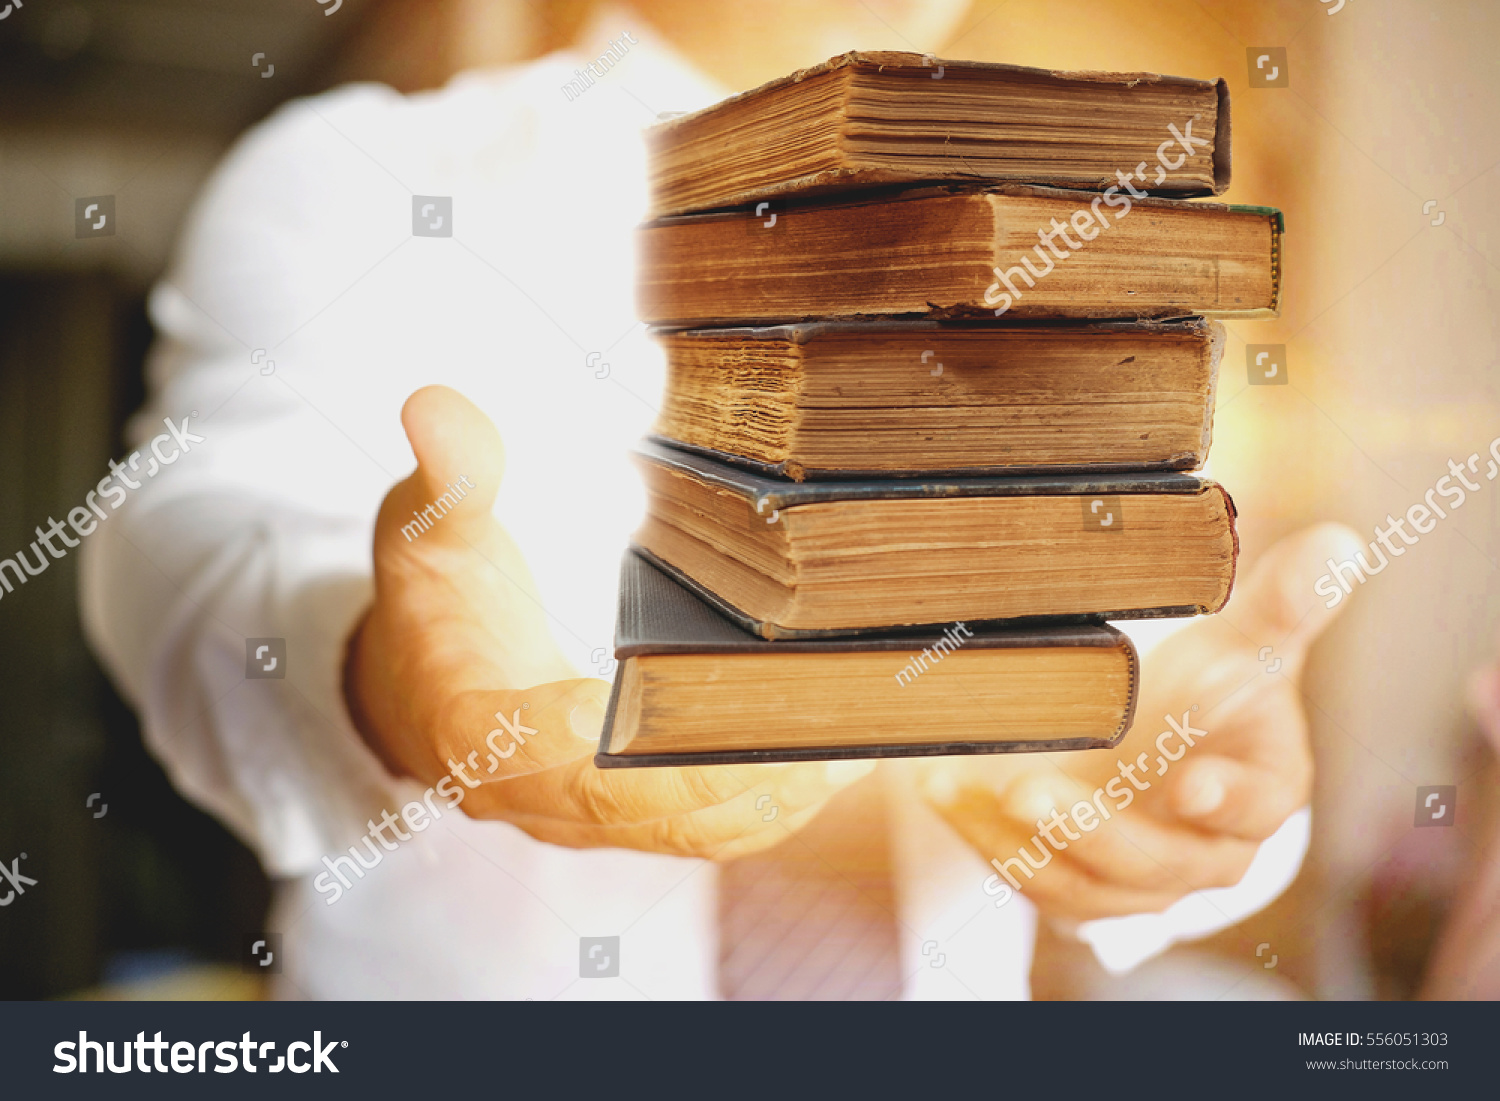 Concept of wisdom, book in man's hands in gesture of giving. #556051303